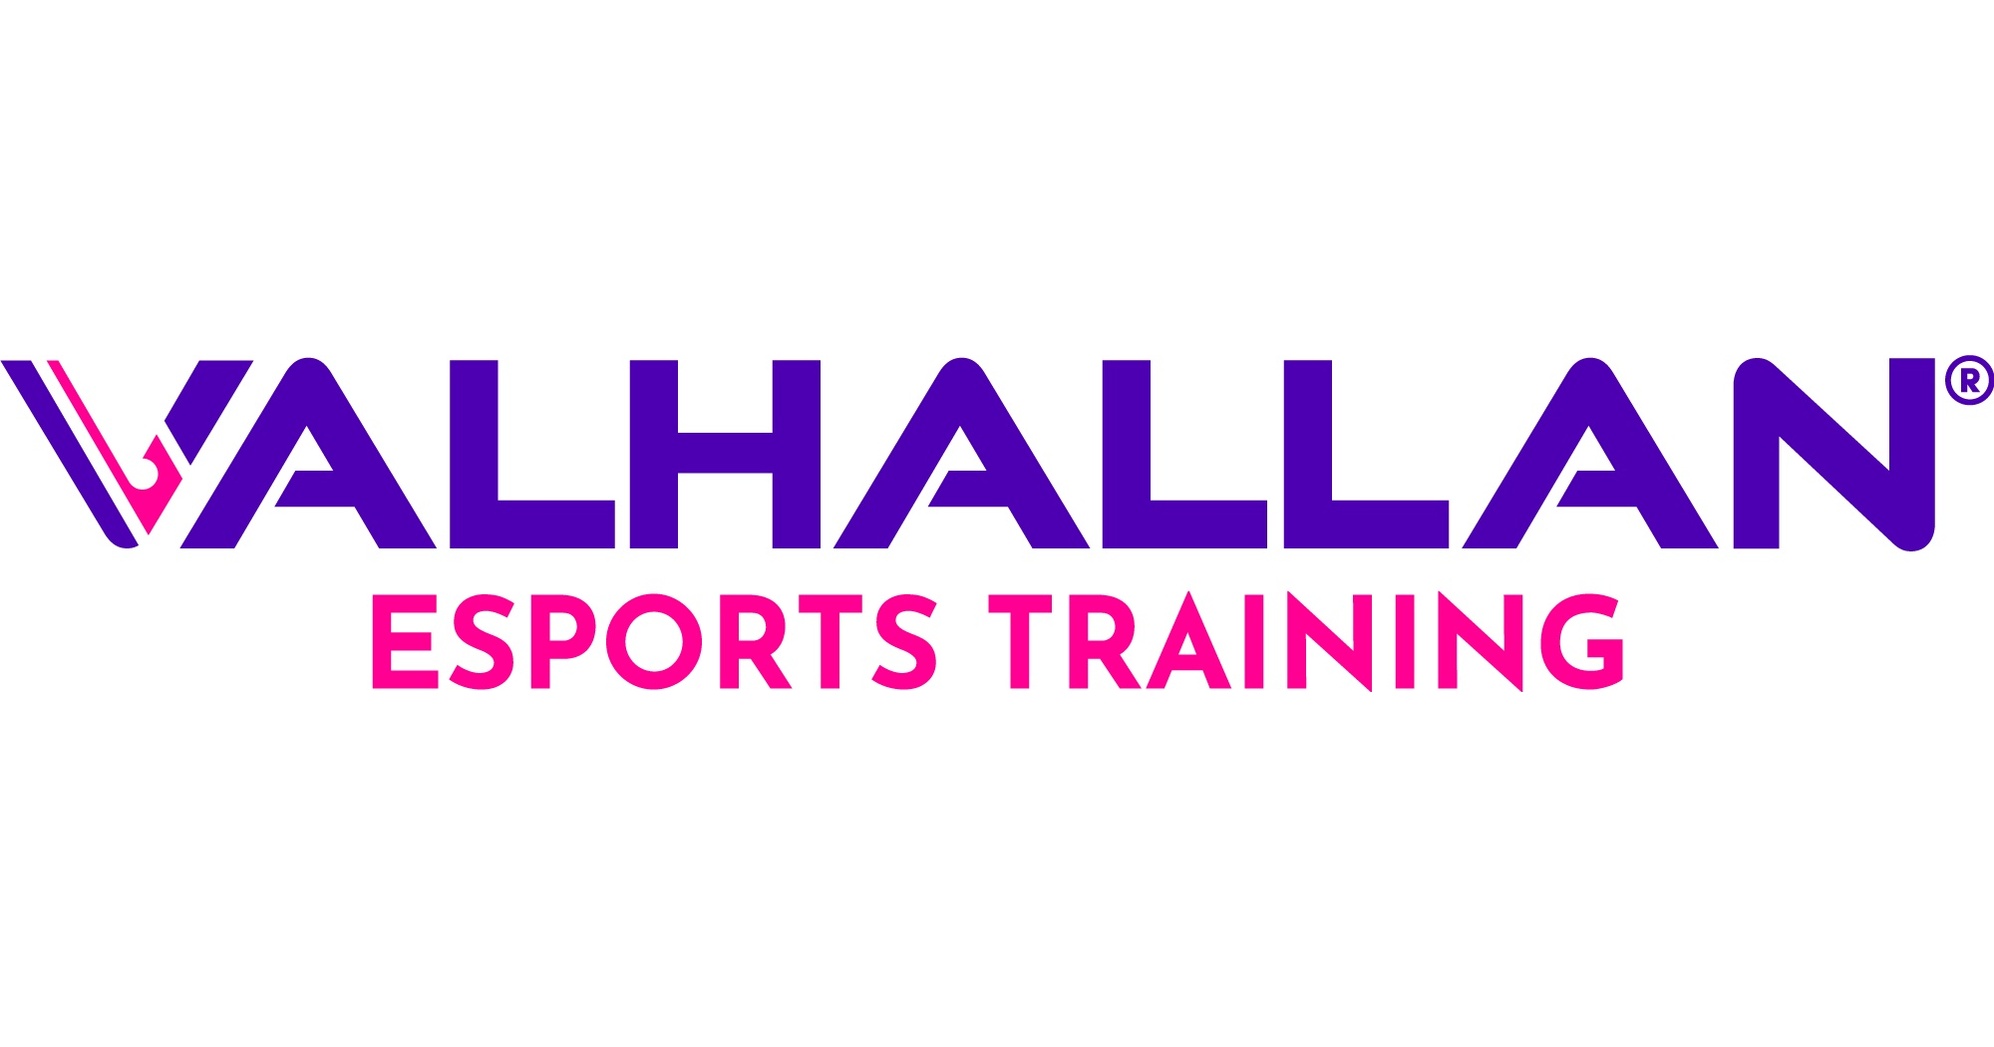 Valhallan Esports Training